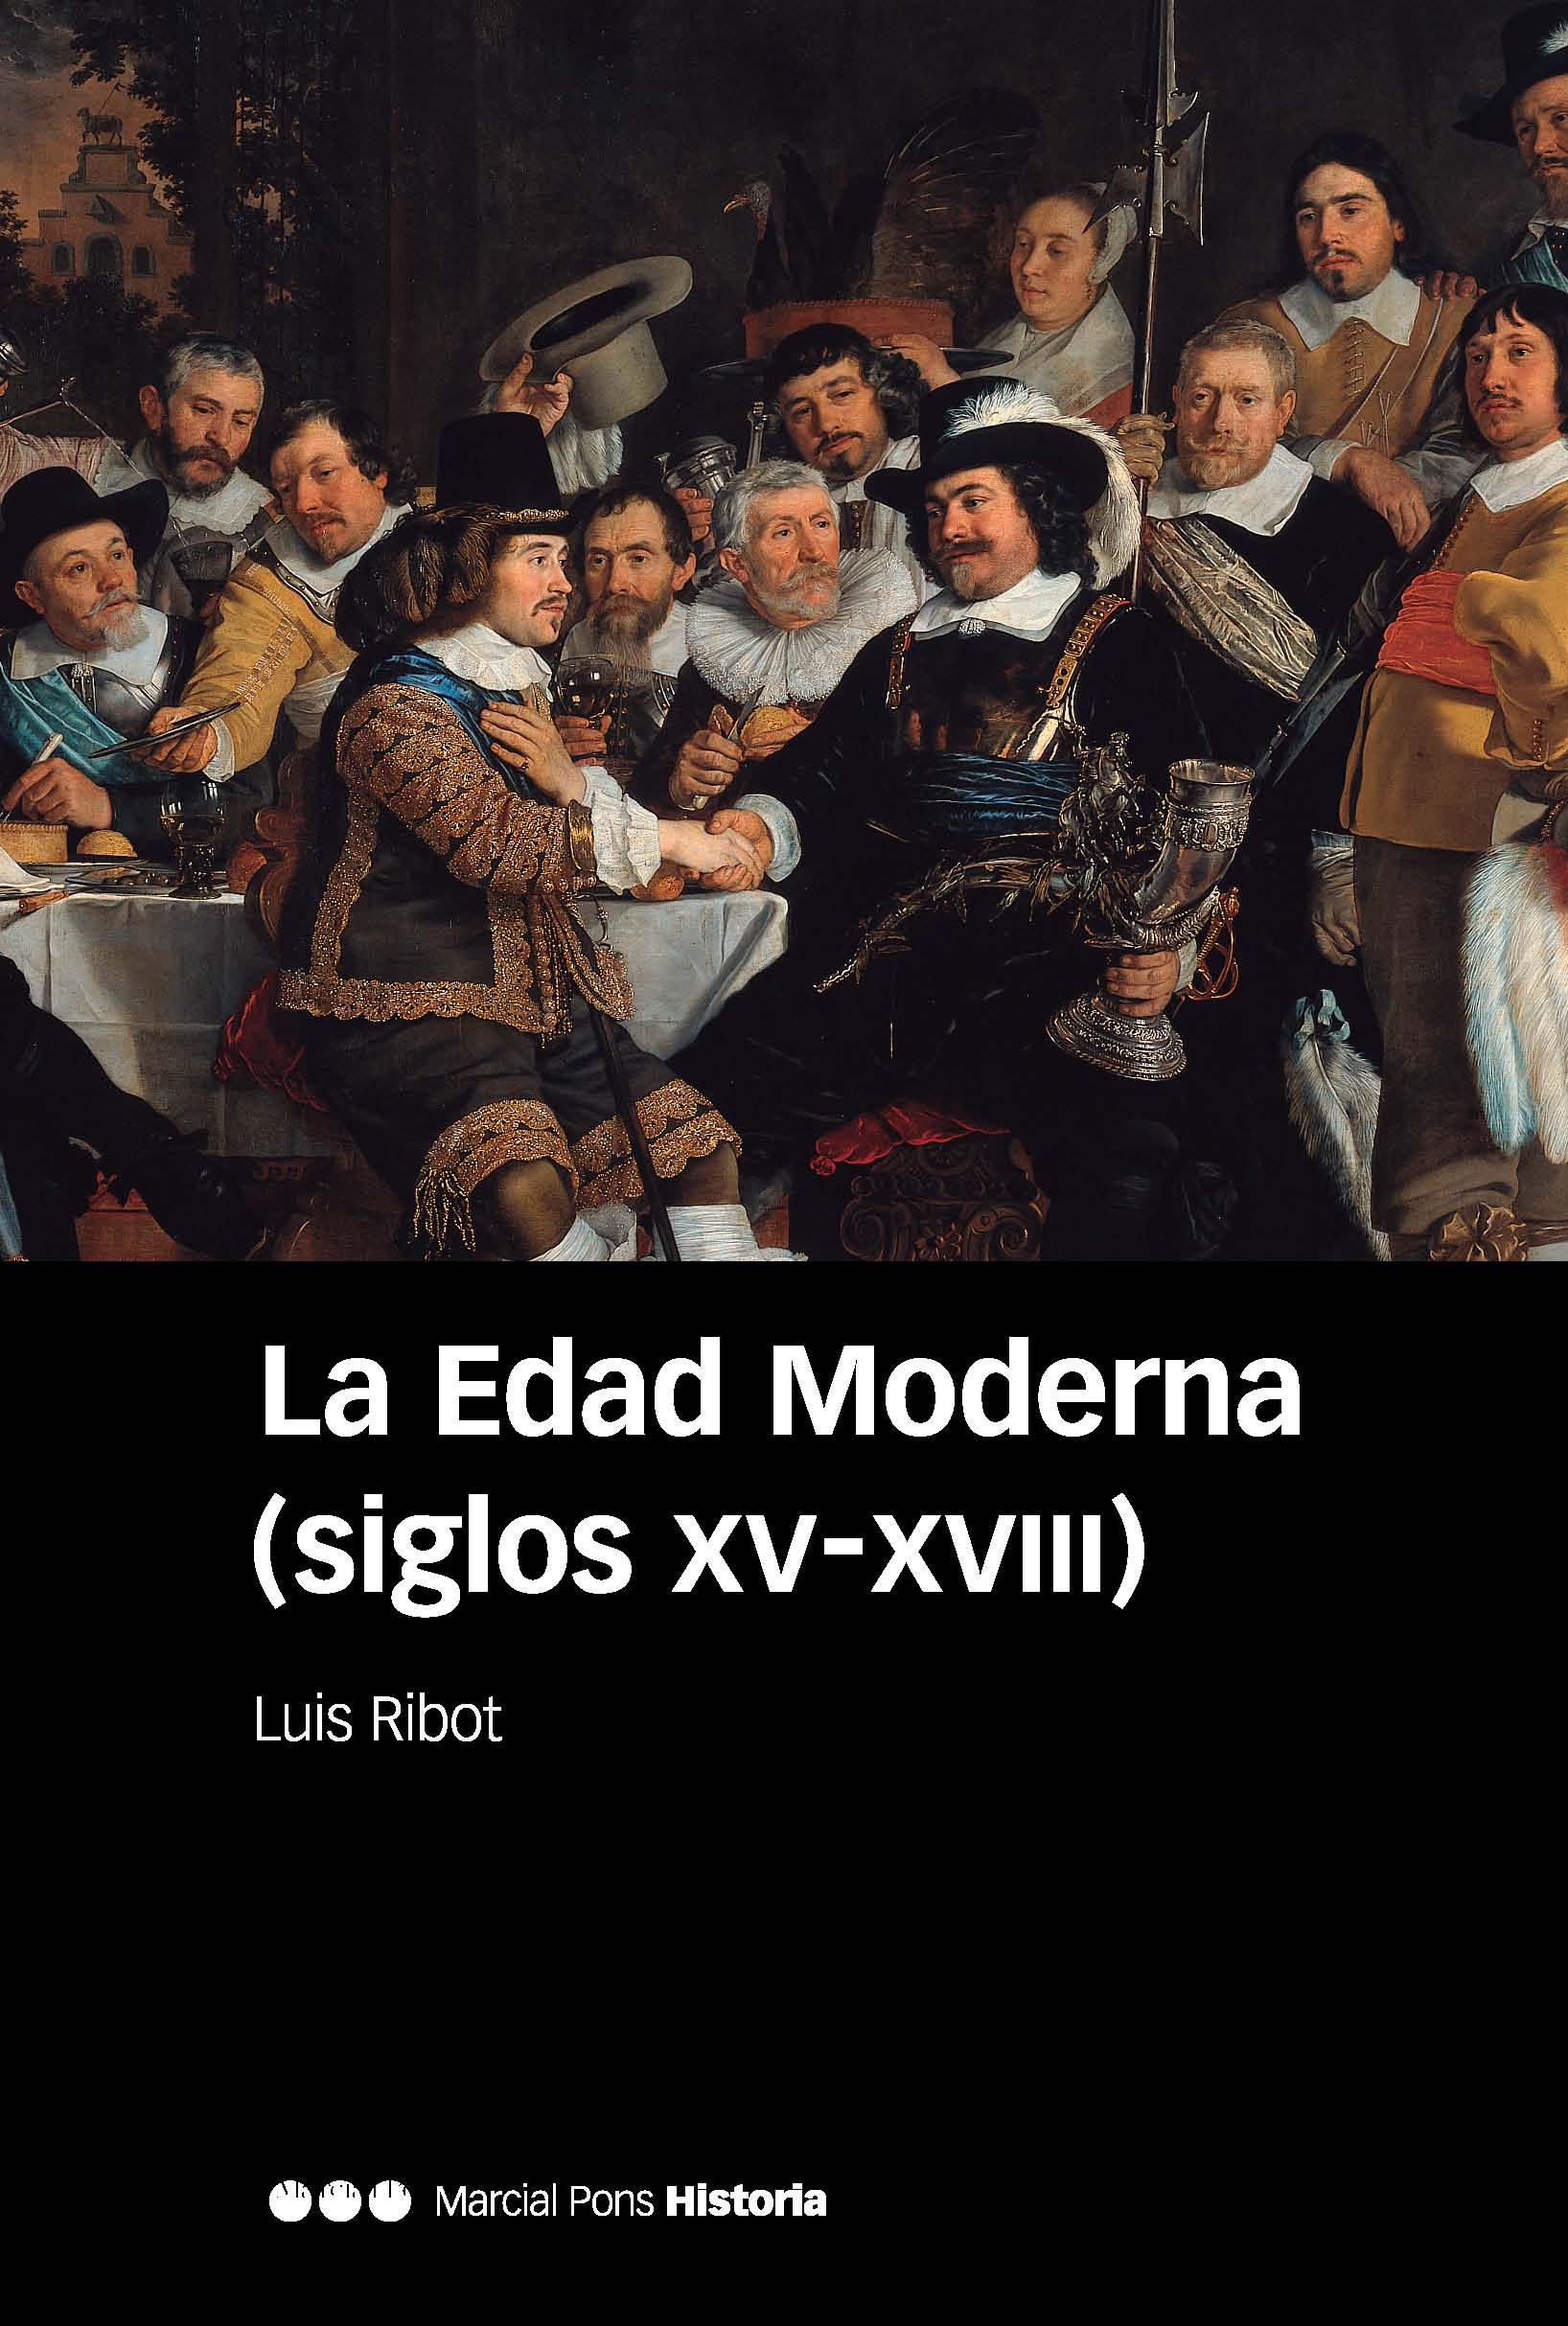 La Edad Moderna (siglos XV-XVIII) 6ª ed.